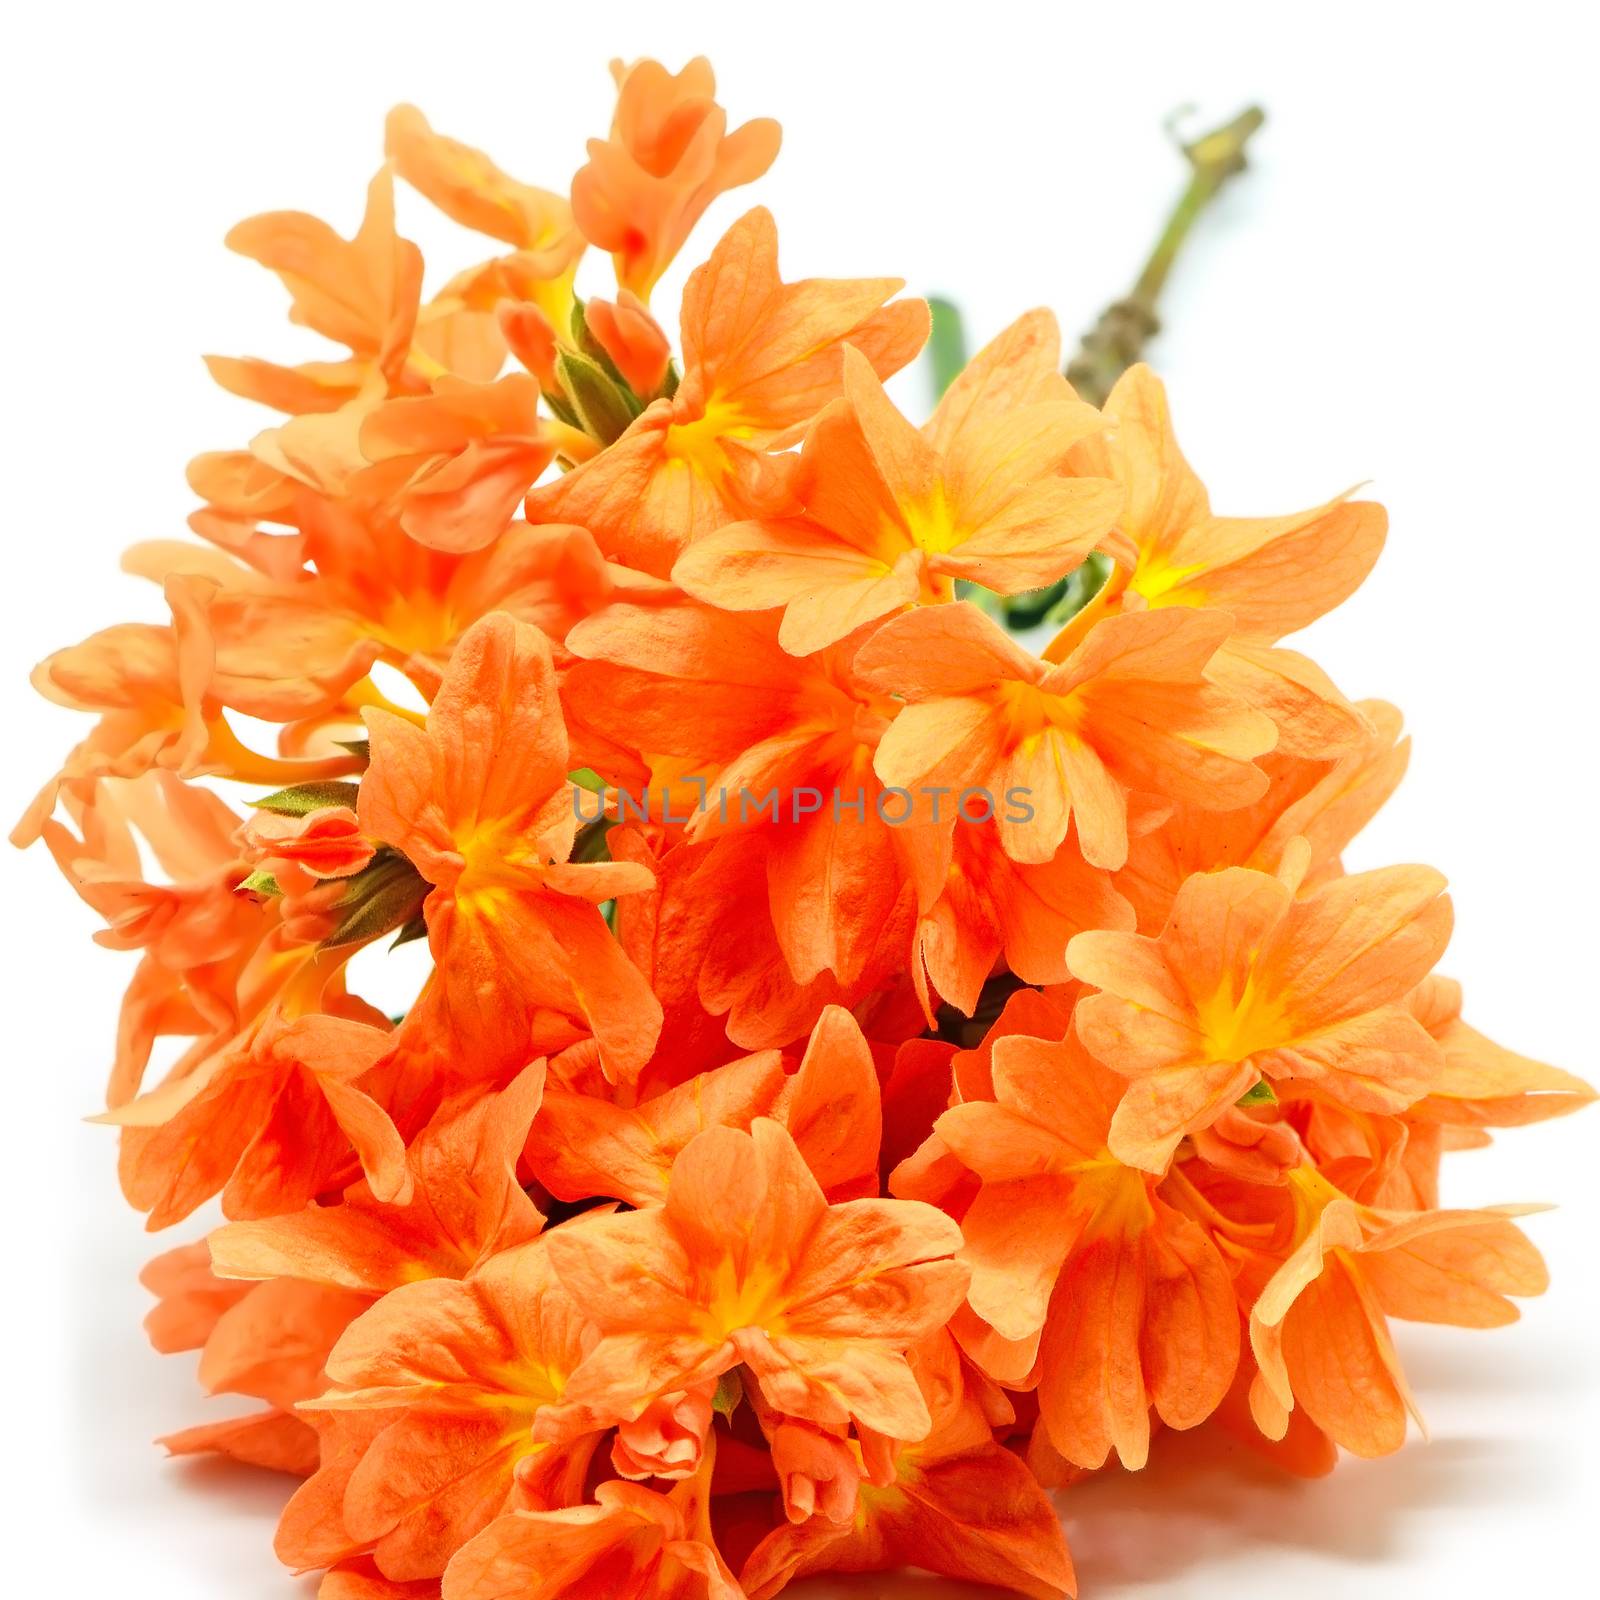 Ornamental orange Firecracker flower (Crossandra infundibuliformis), isolated on a white background